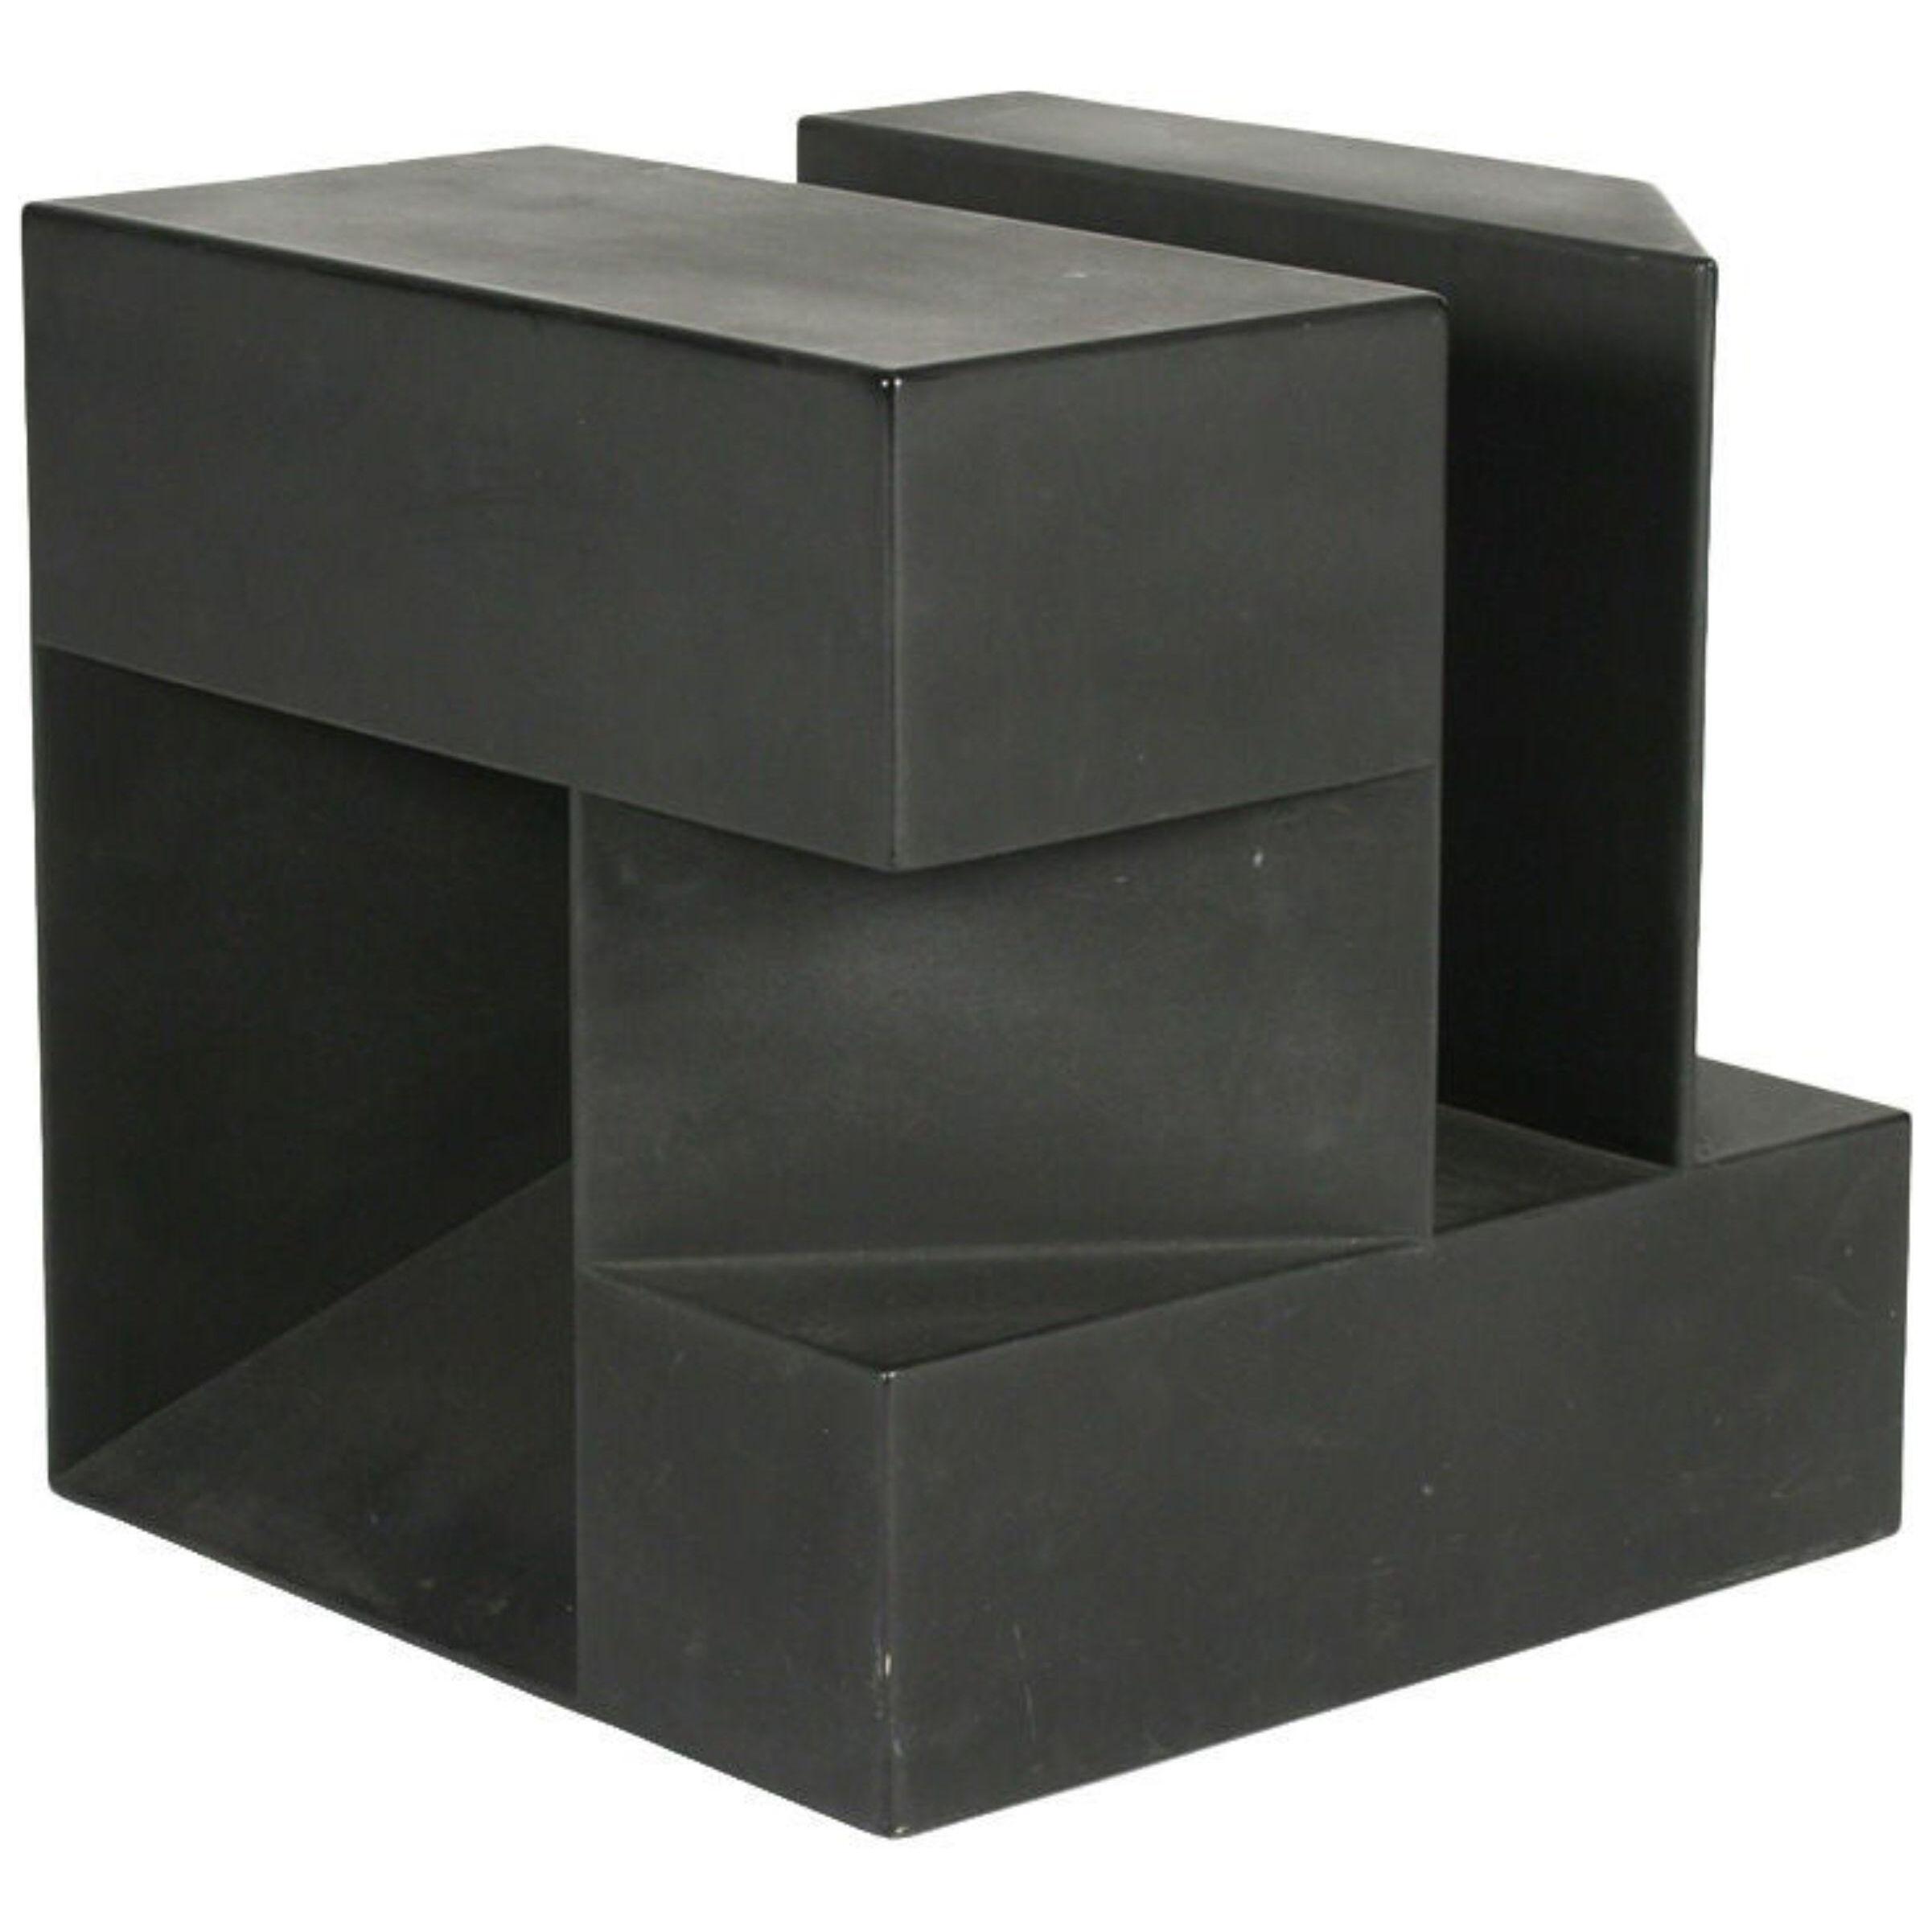 'Black Cube' Aluminum Sculpture by Alfredo Halegua